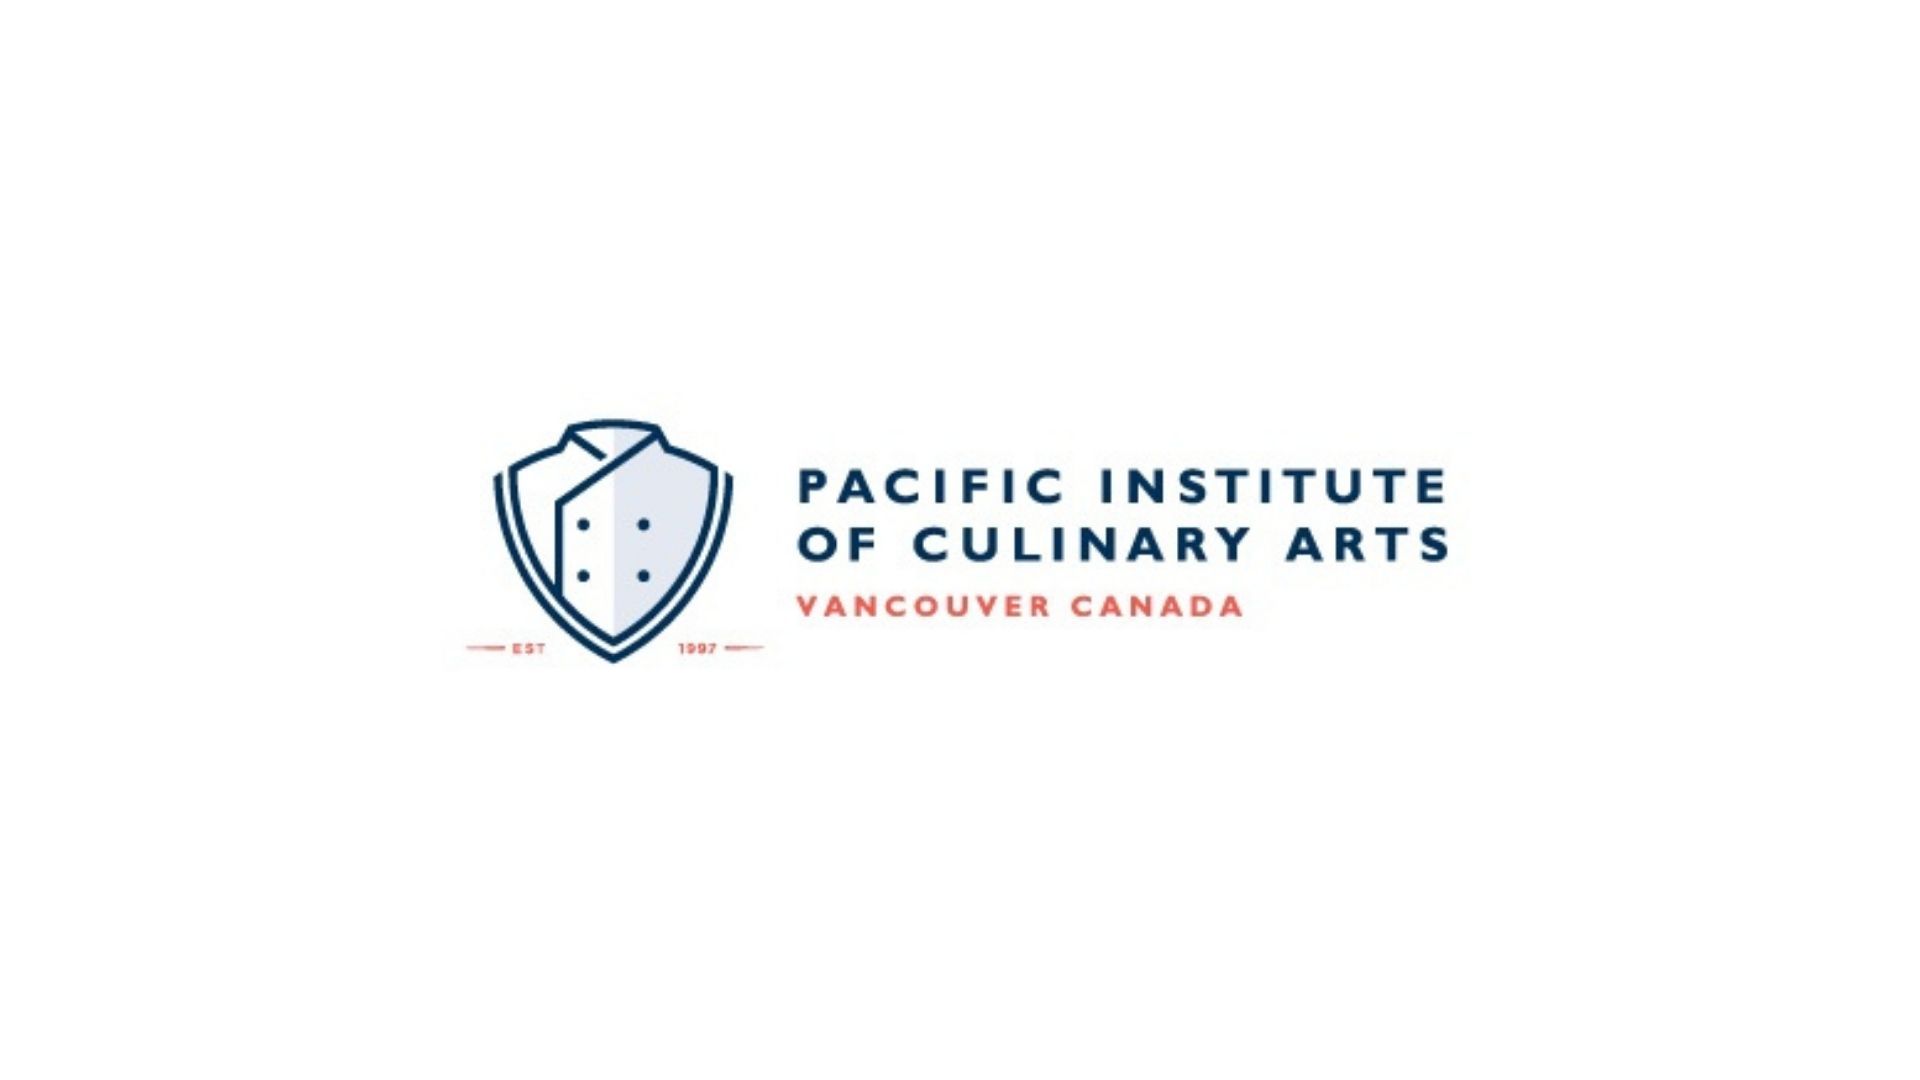 Pacific Institute of Culinary Arts Logo